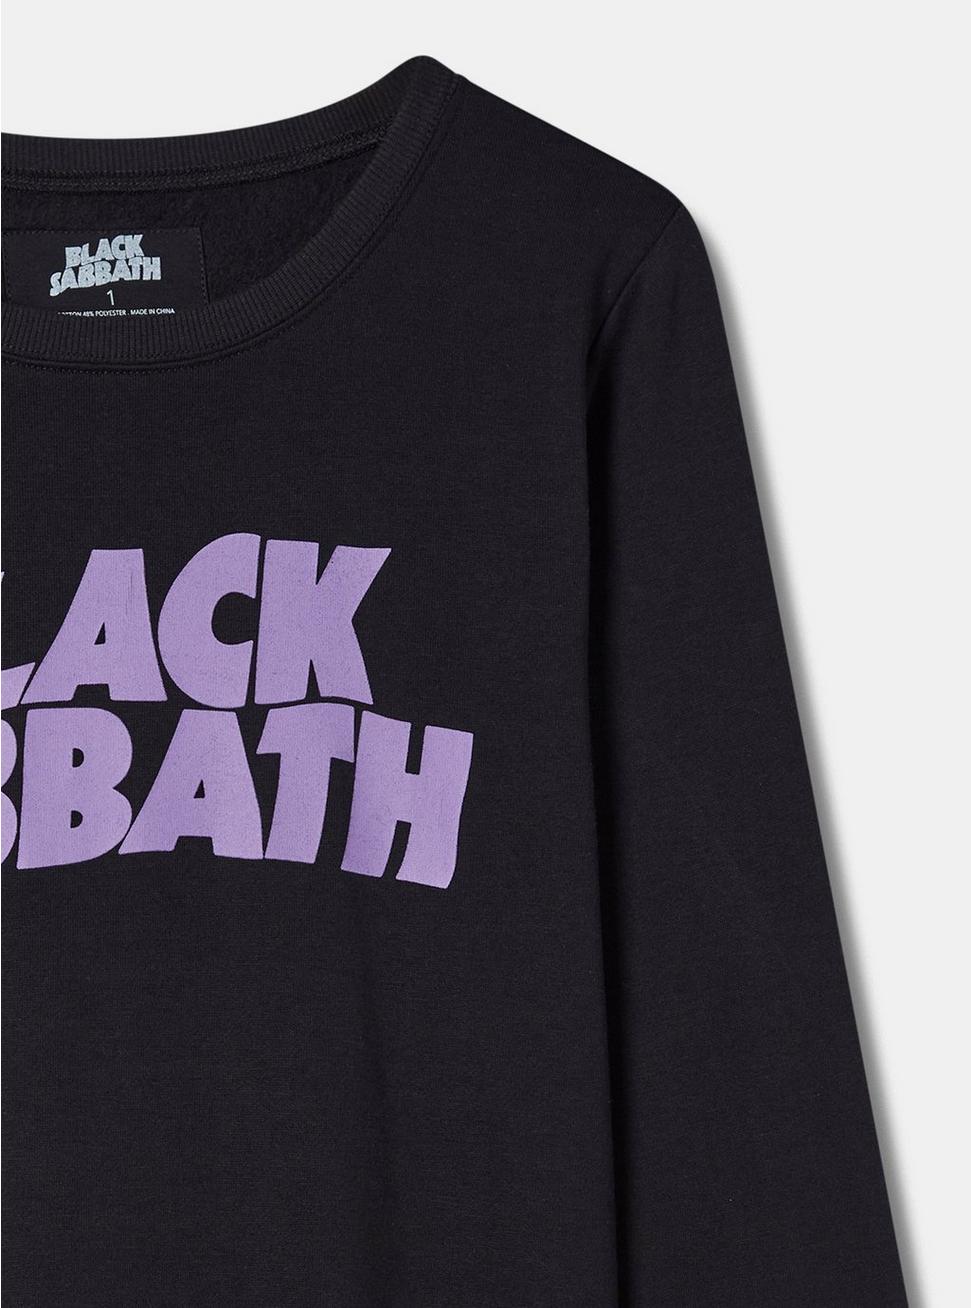 Black Sabbath Fleece Sweatshirt, DEEP BLACK, alternate